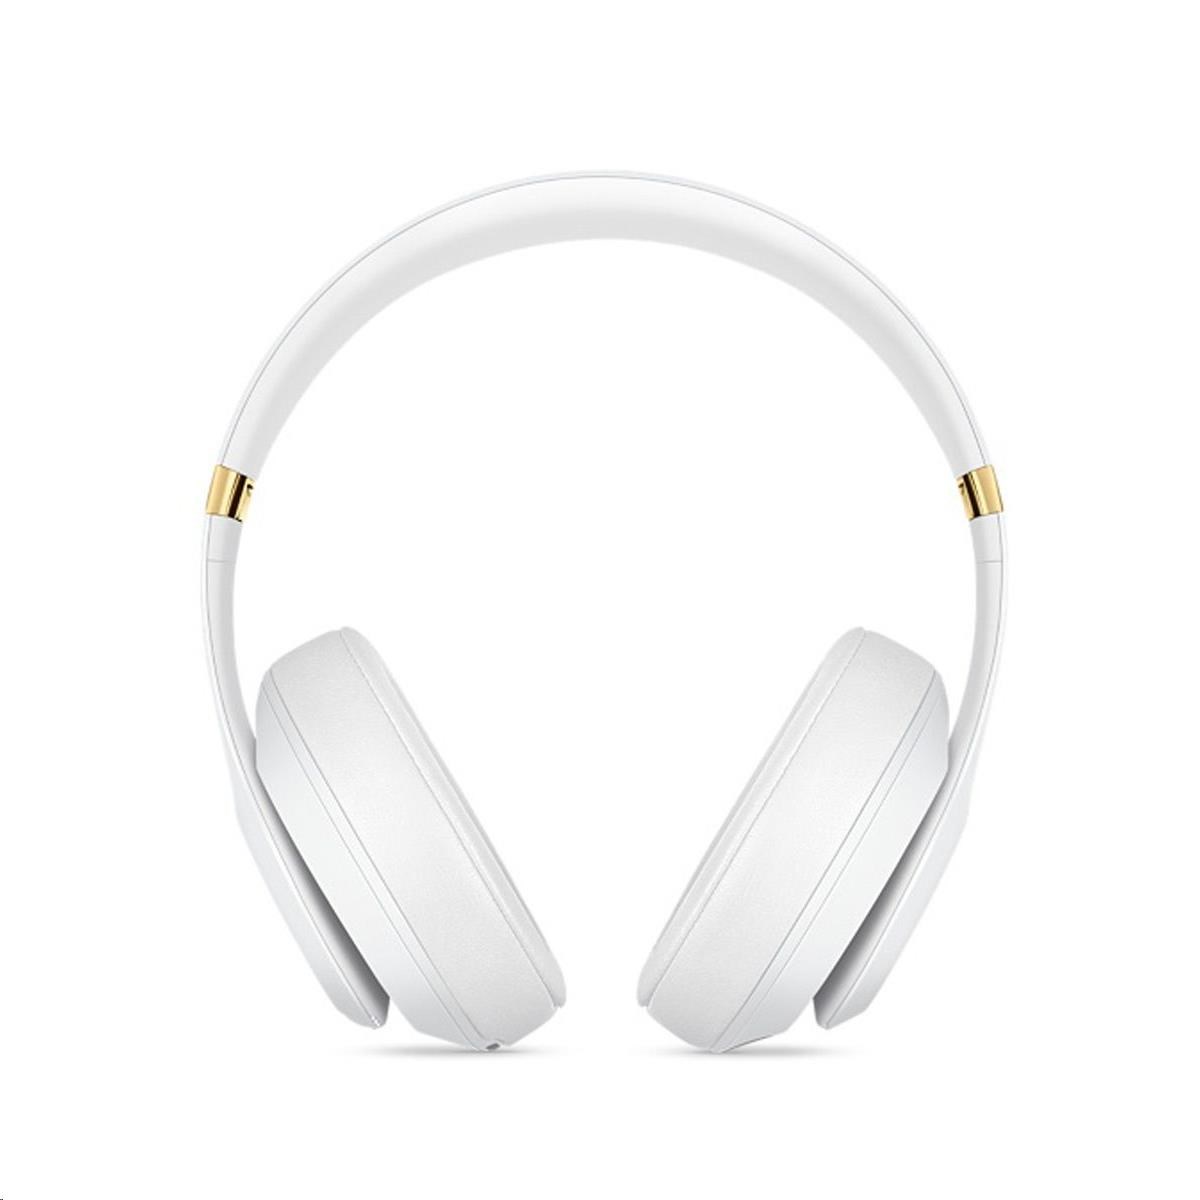 Beats Studio3 Wireless Over-Ear Headphones - White2 